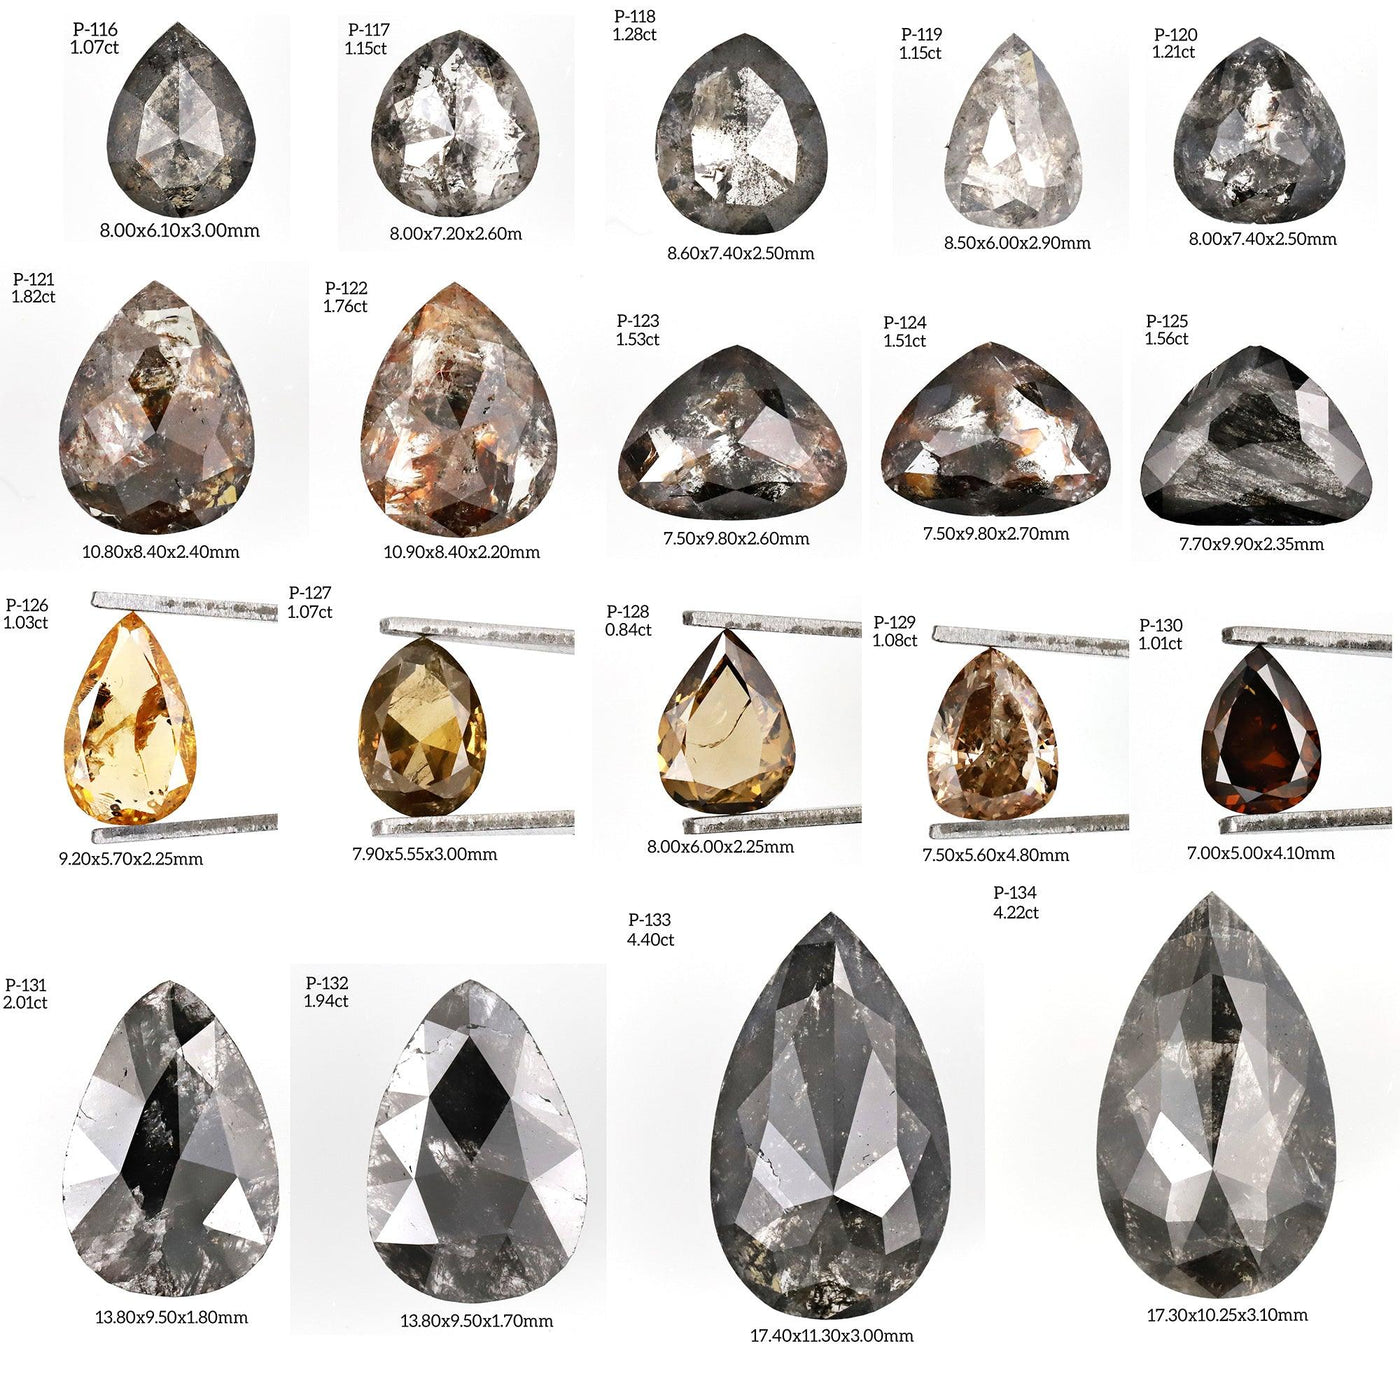 P130 - Salt and pepper pear diamond